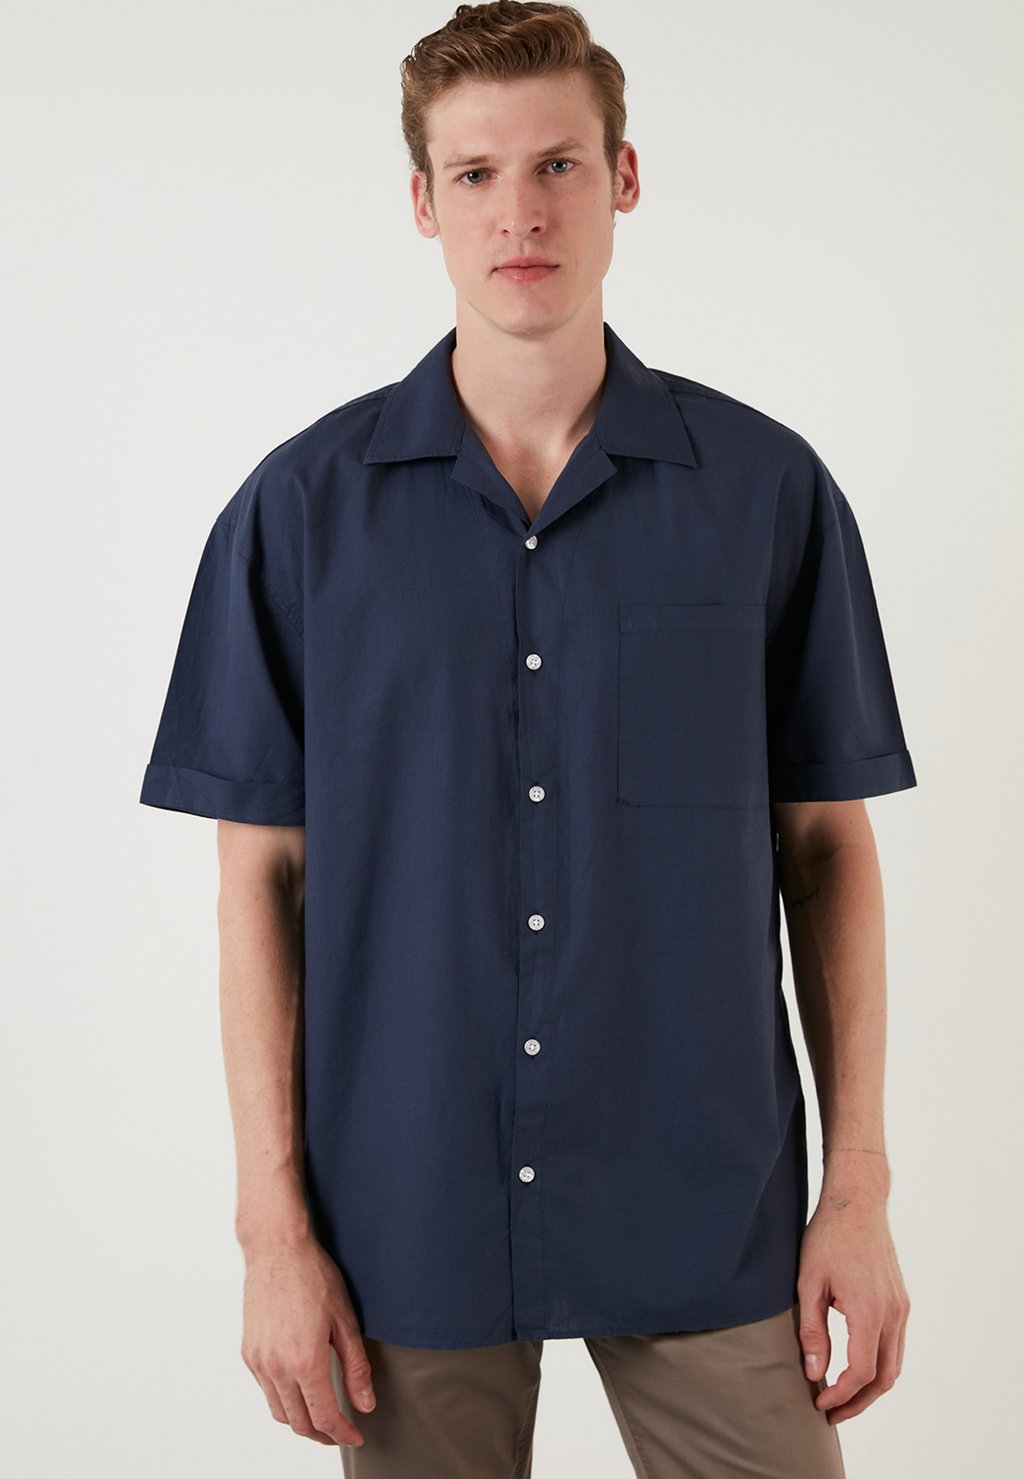 Рубашка REGULAR FIT Buratti, темно-синий рубашка strokesman s regular fit темно синий